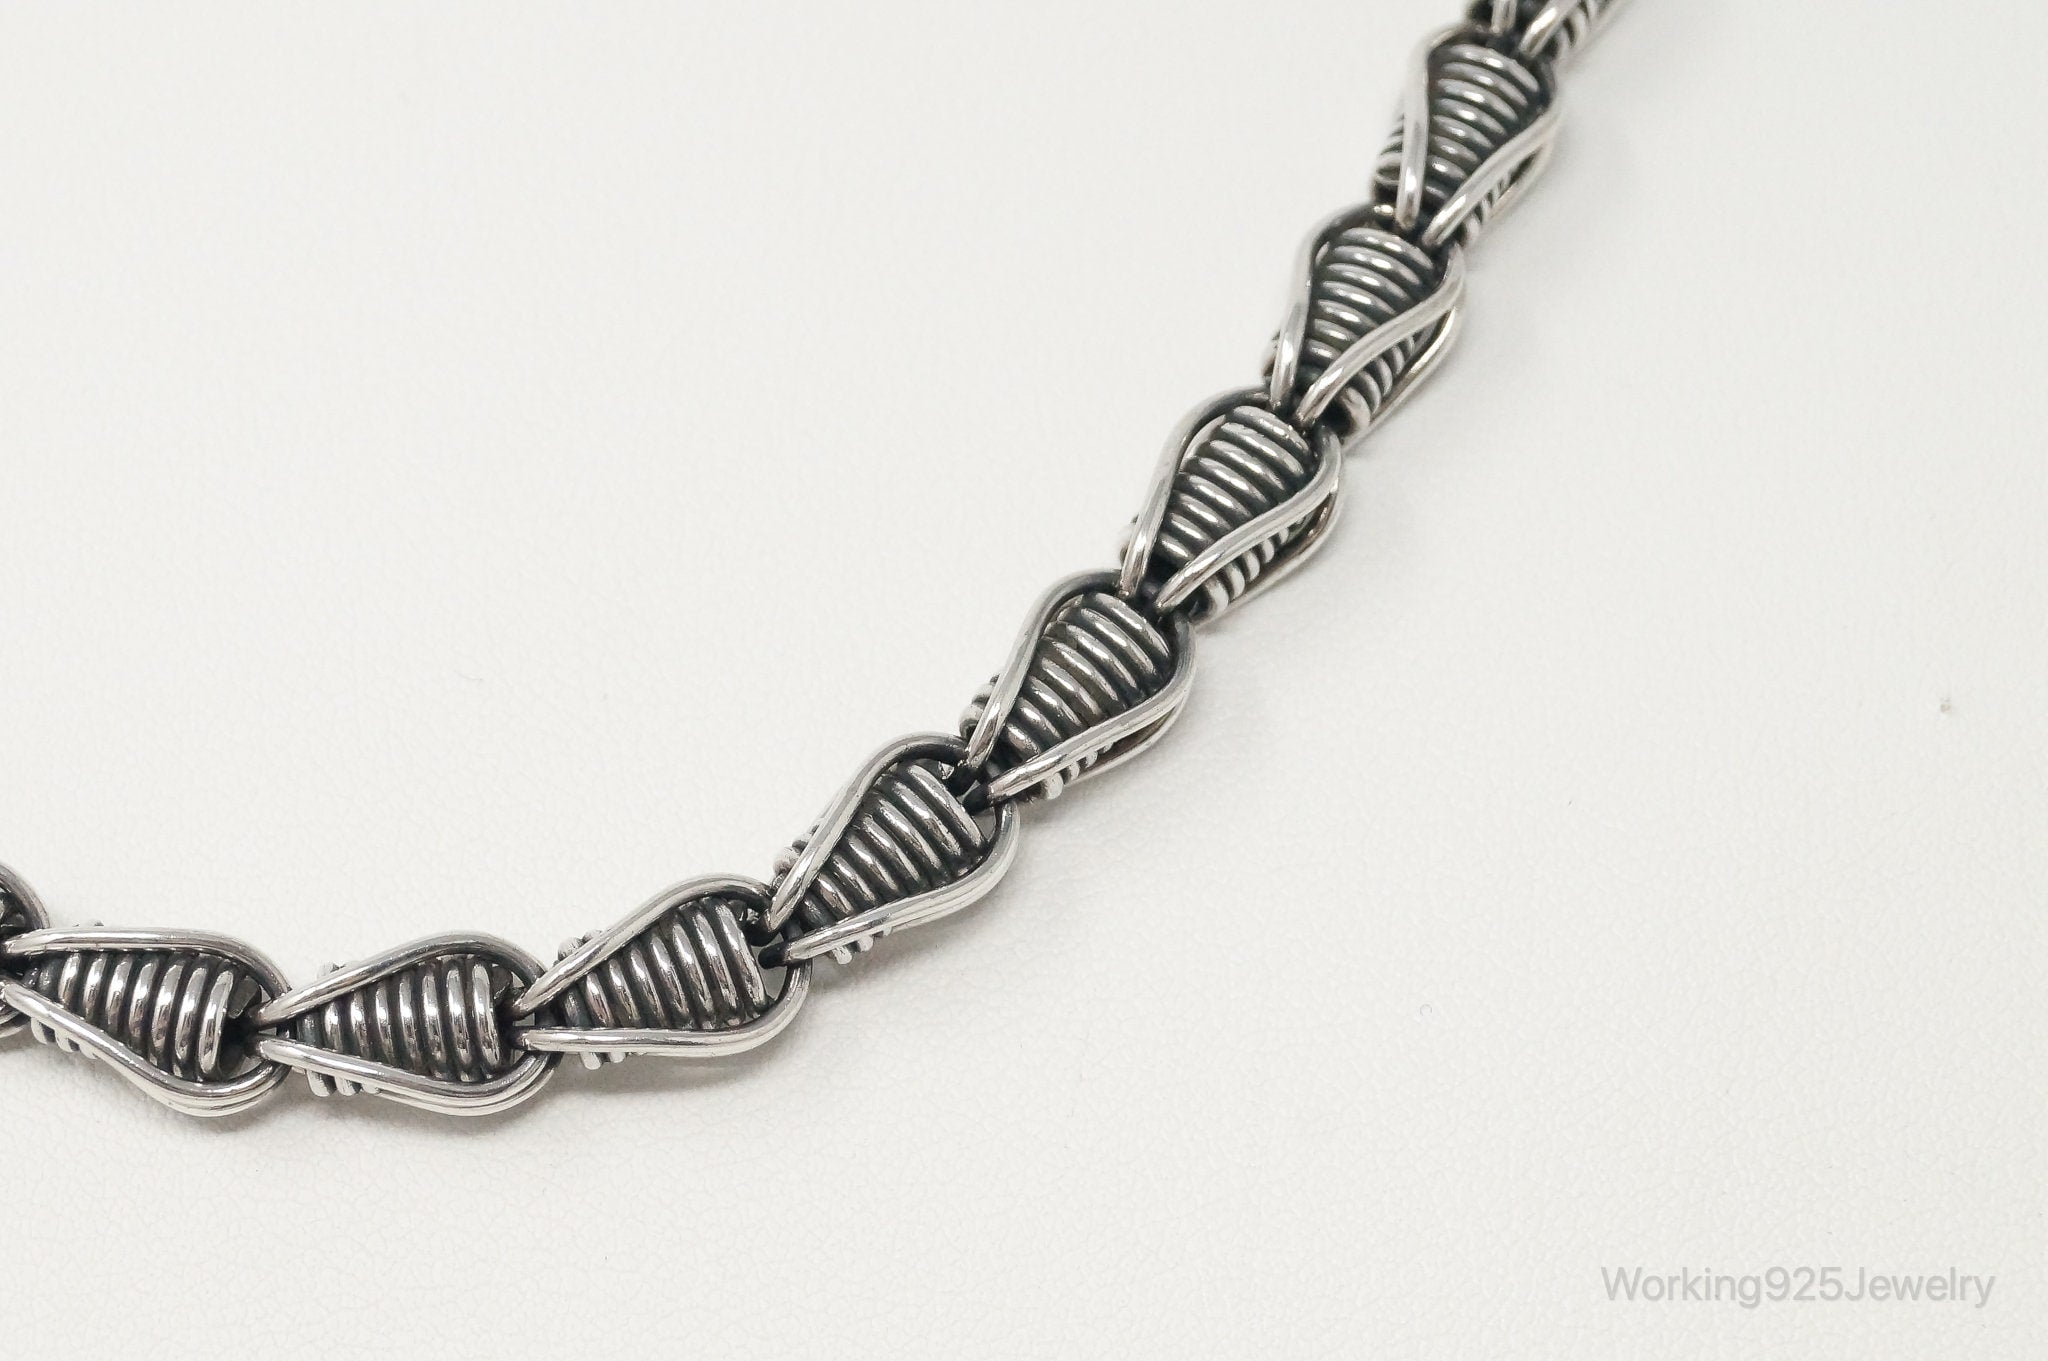 Designer BA Suarti Link Sterling Silver Chain Necklace